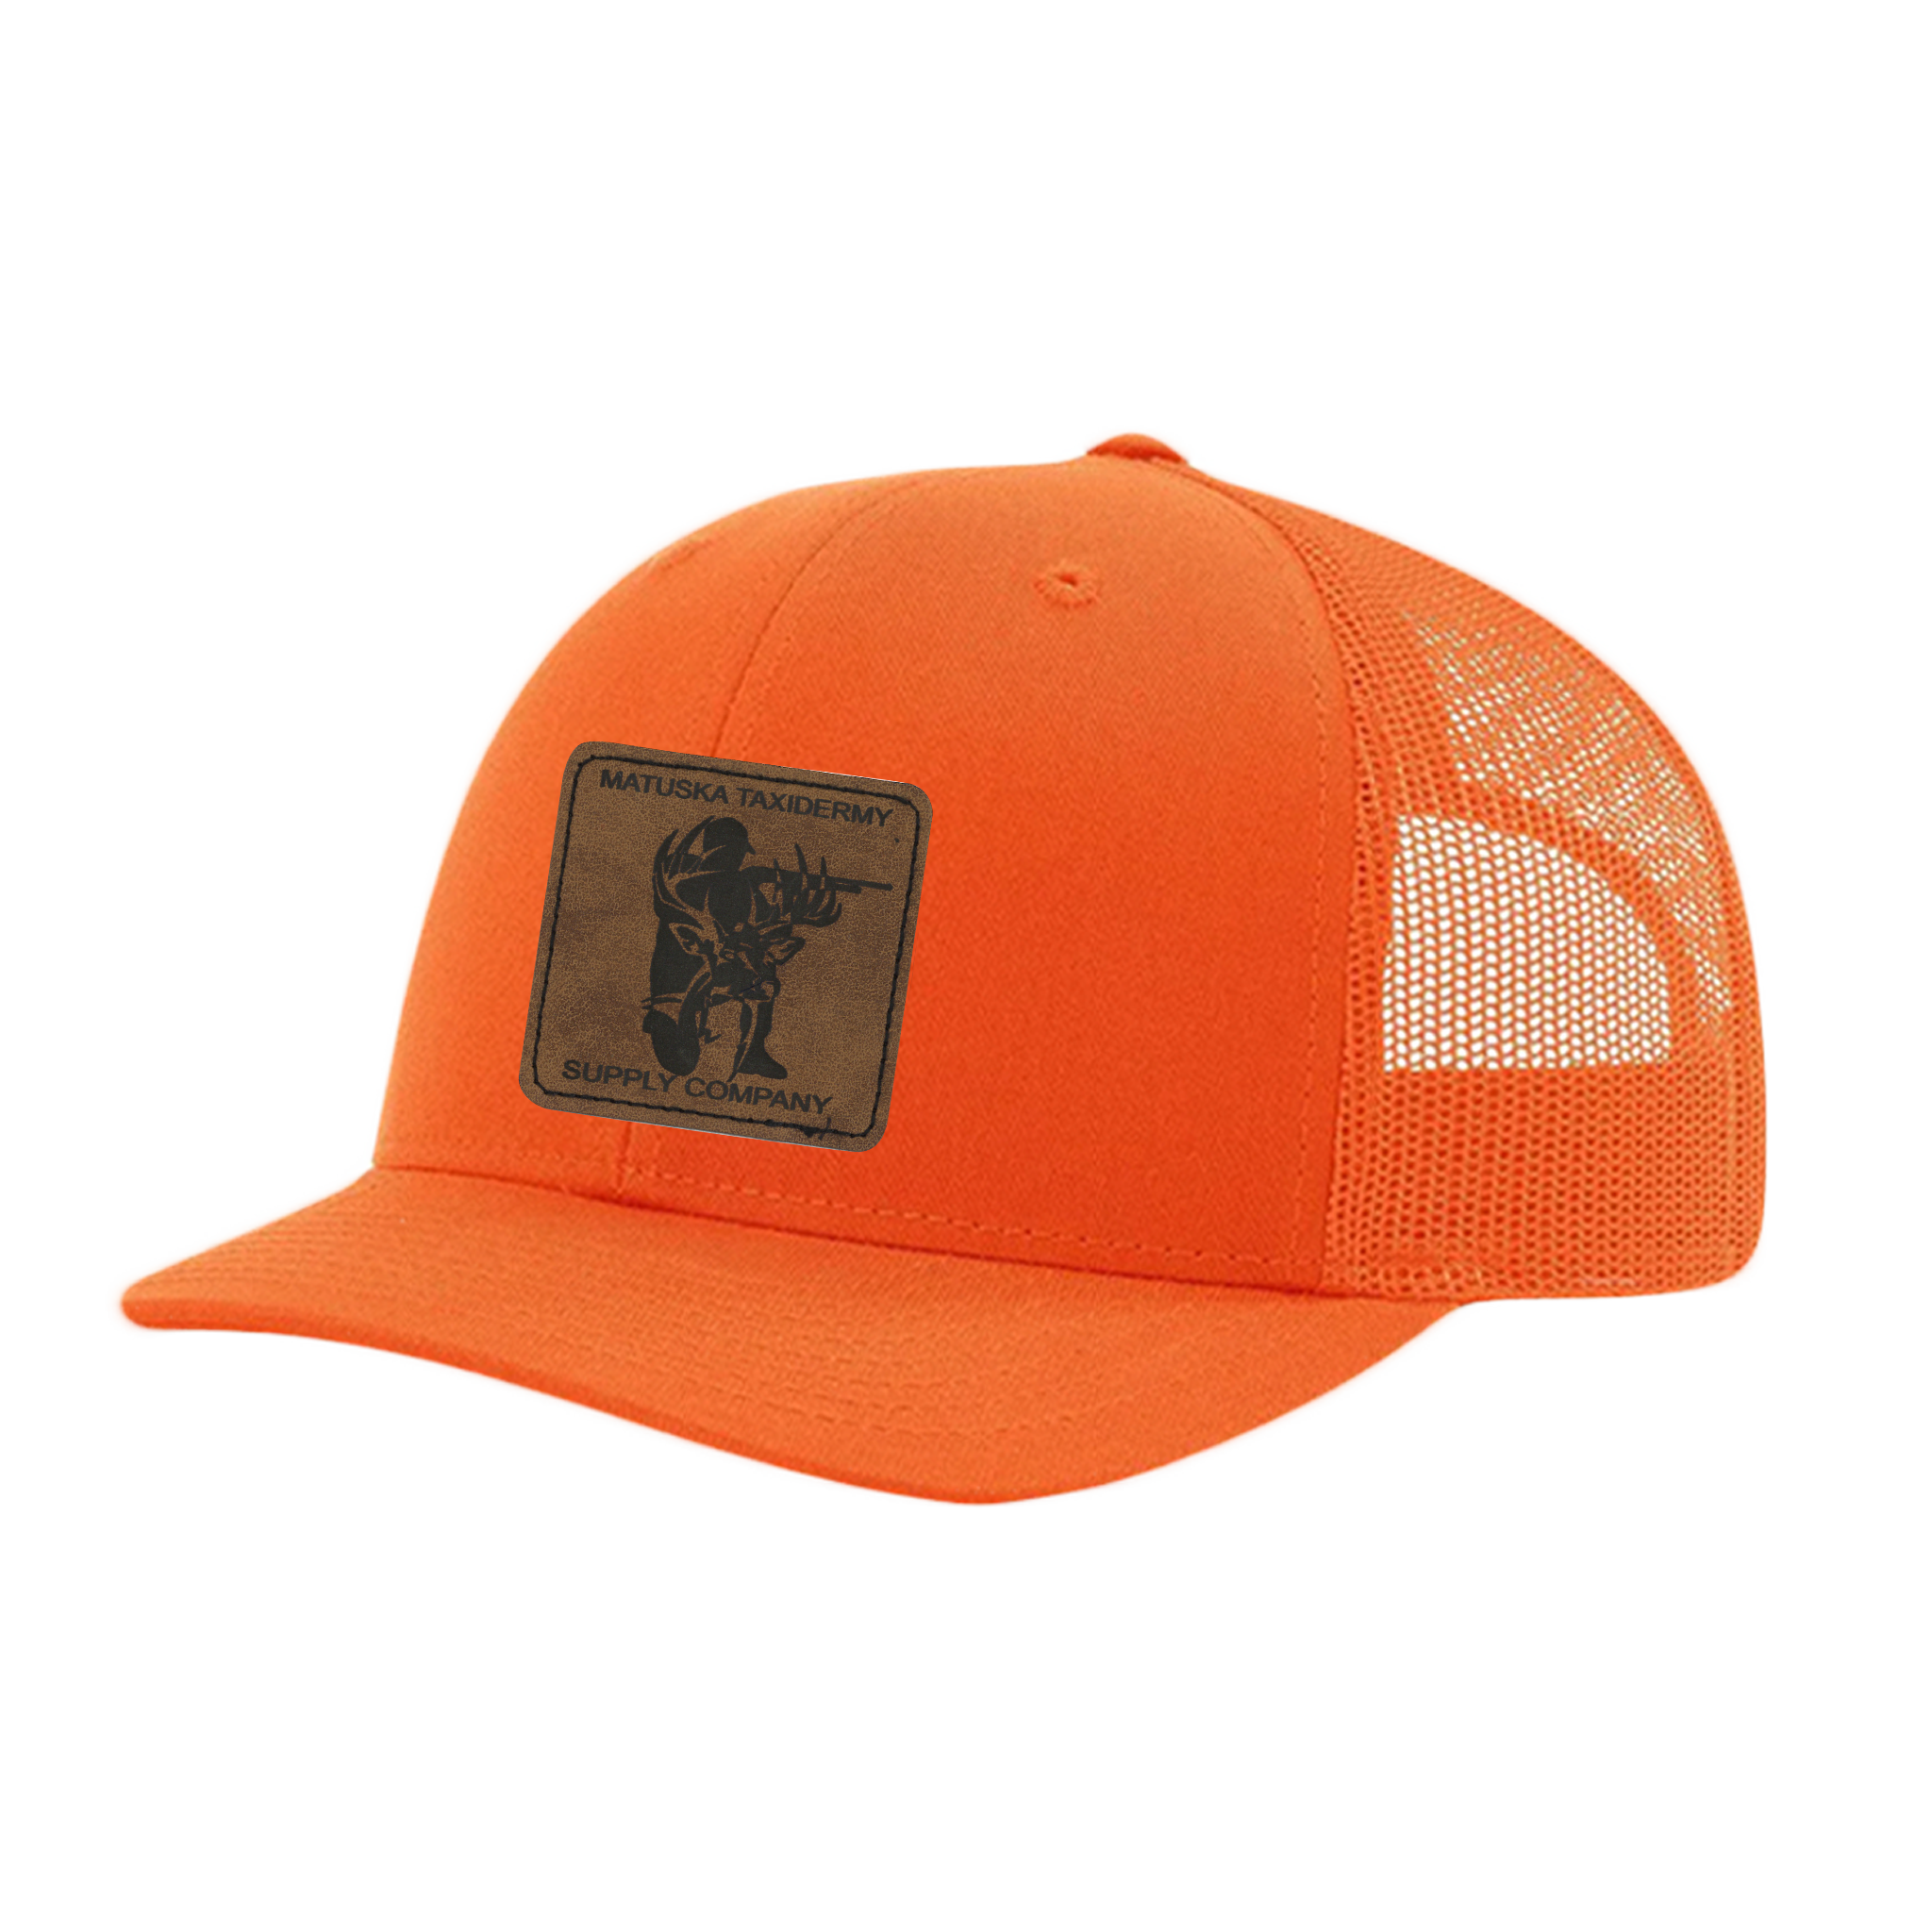 Richardson 882 Trucker Hat - Orange (Hunting Patch)